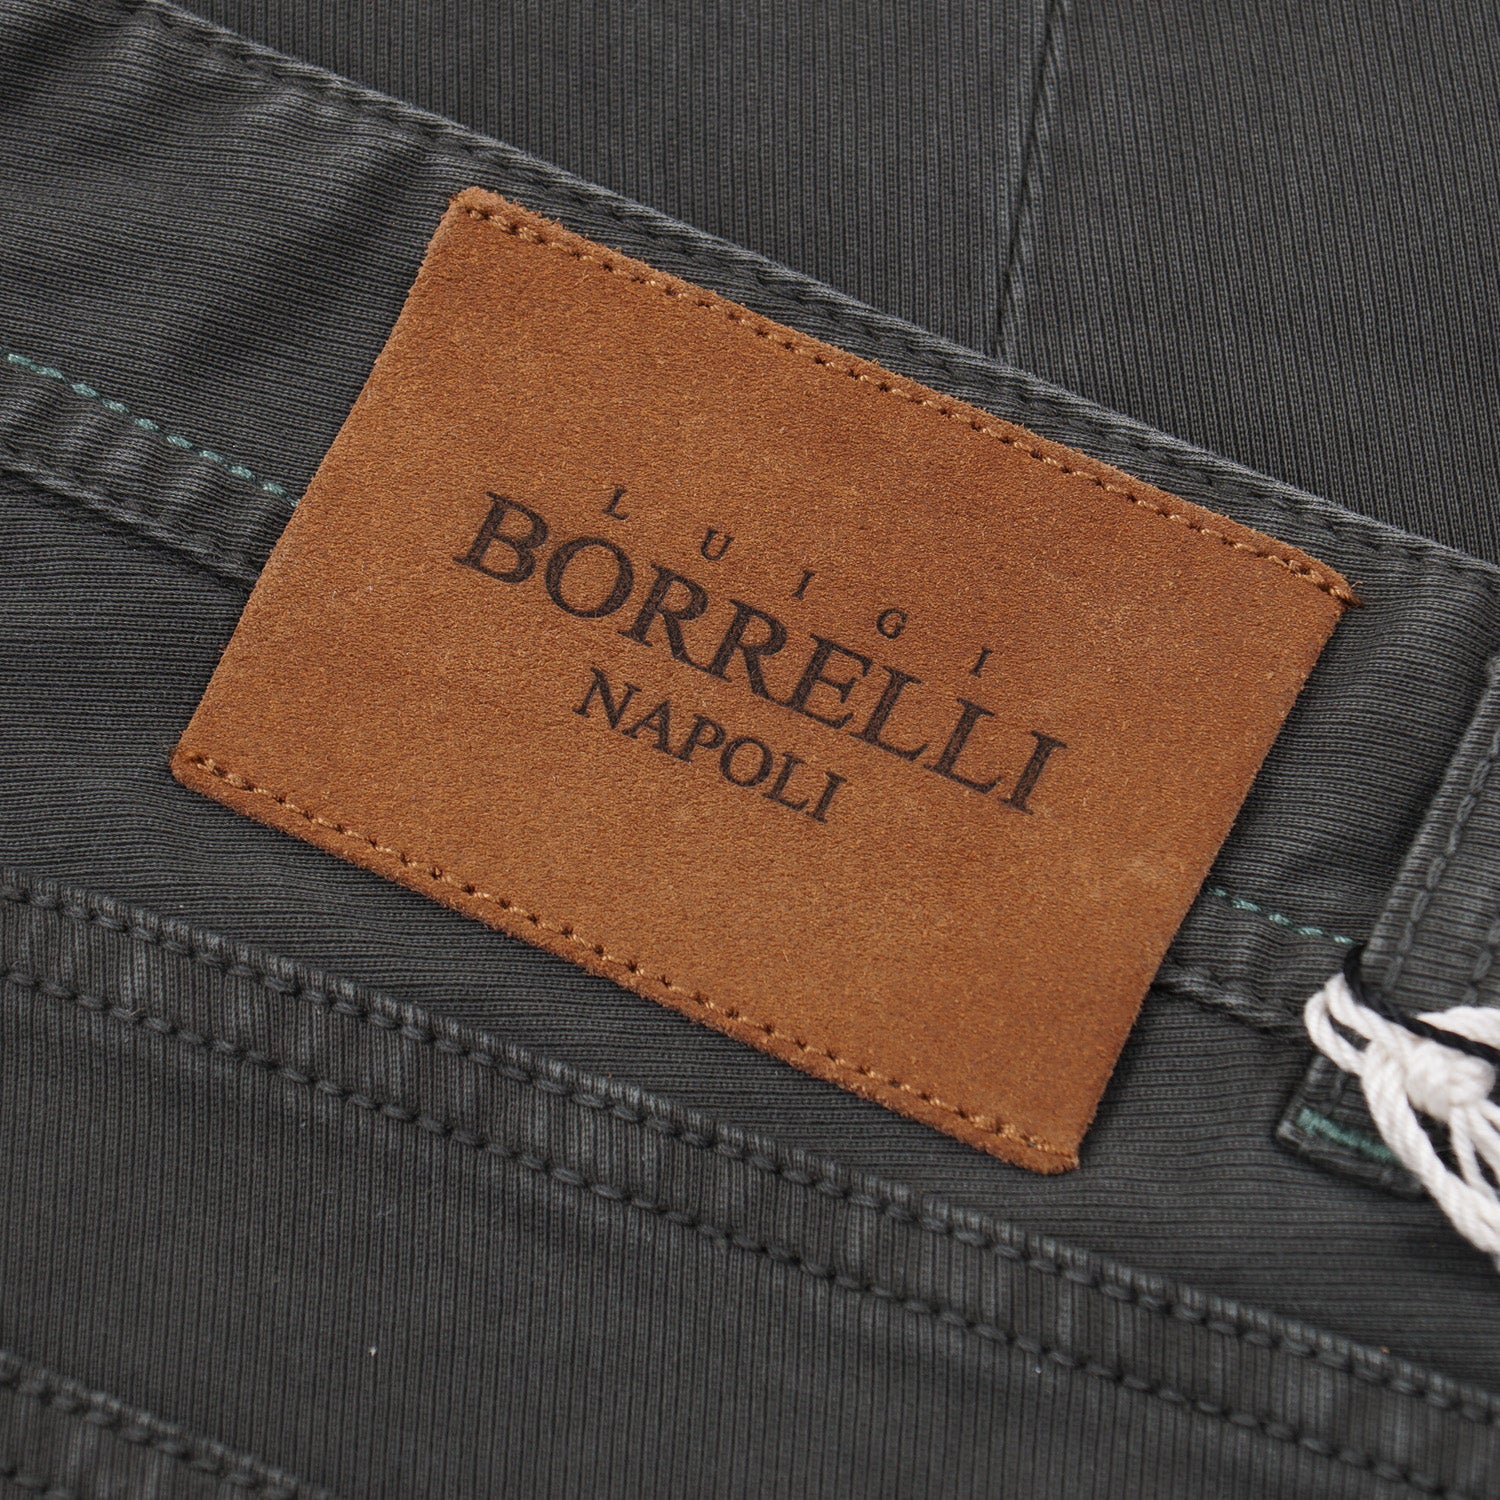 Luigi Borrelli Slim-Fit 5-Pocket Pants - Top Shelf Apparel